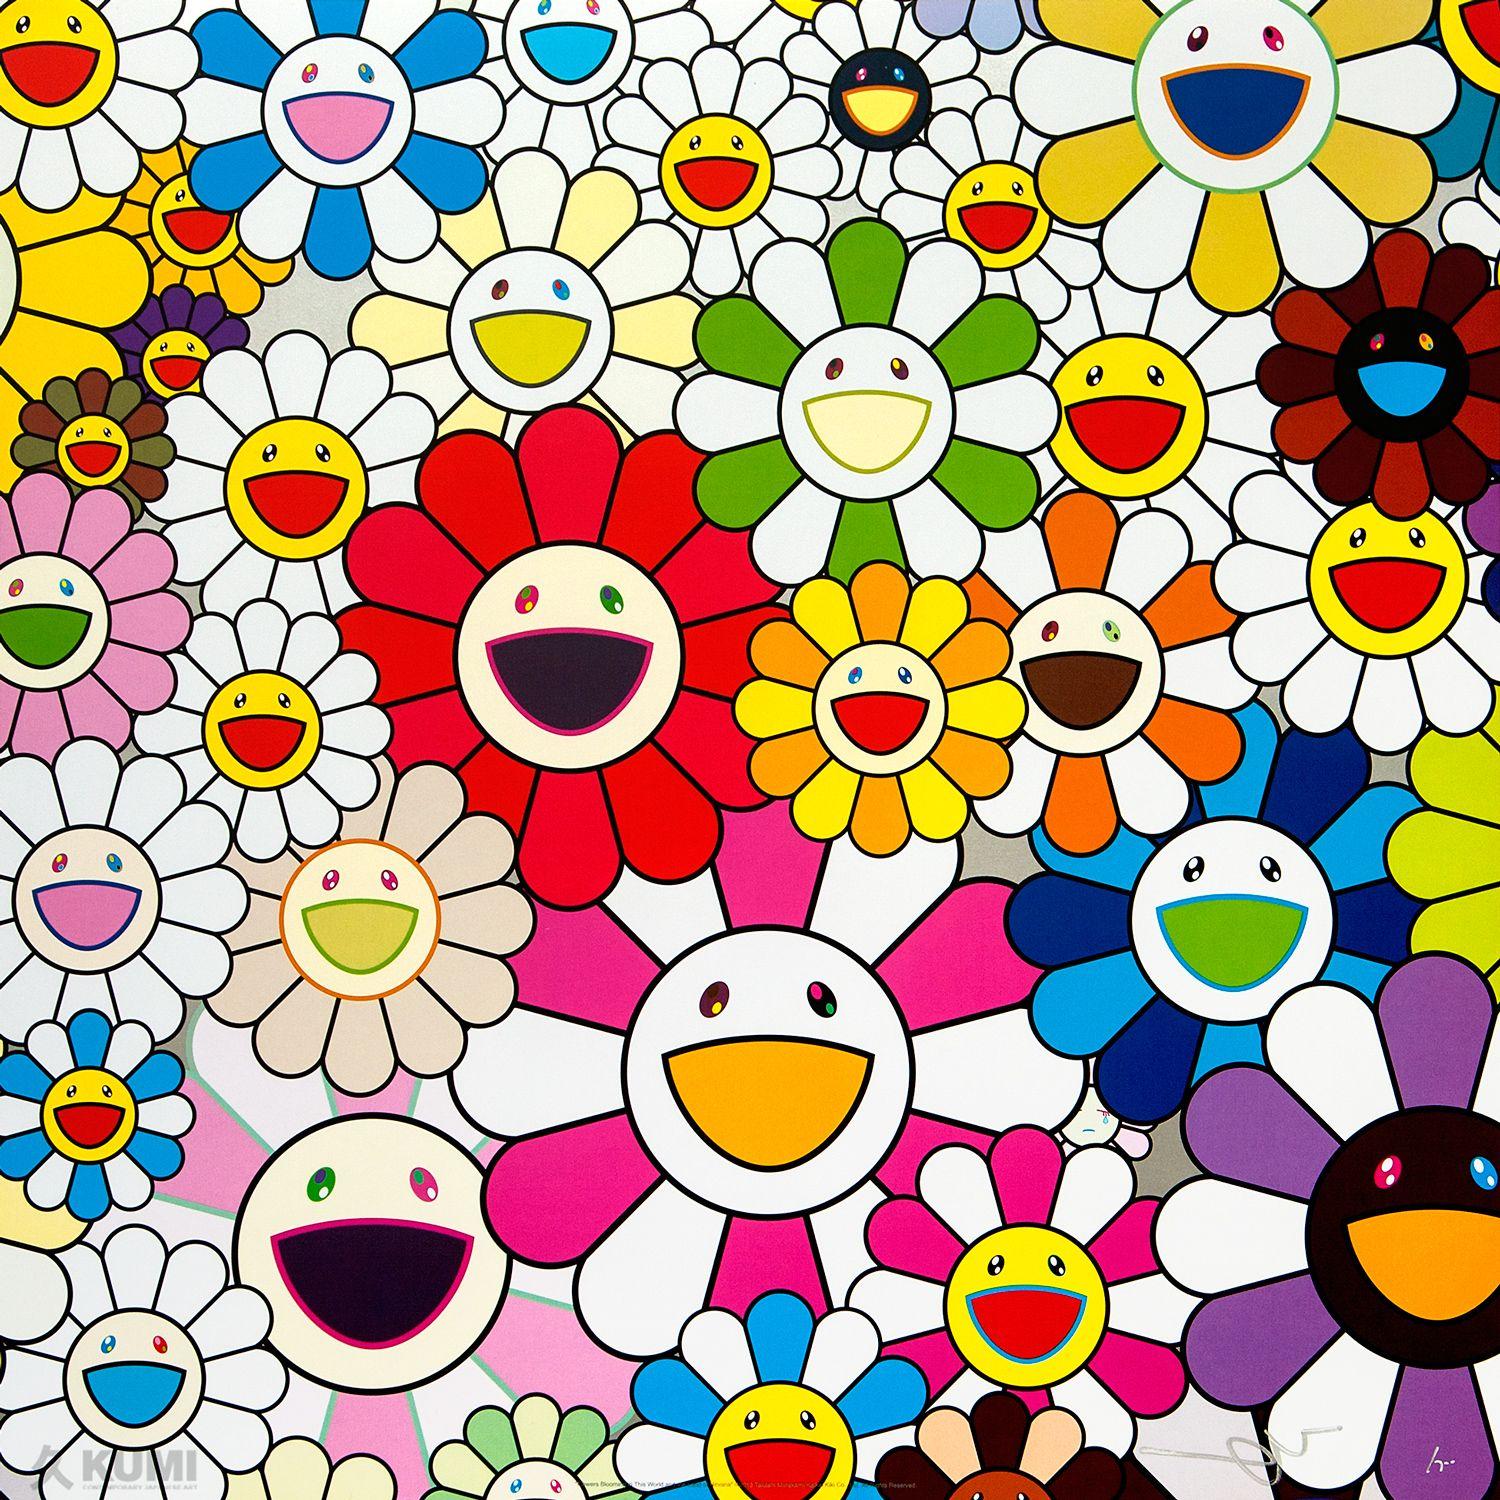 Takashi Murakami Flower Wallpapers - Top Free Takashi Murakami Flower